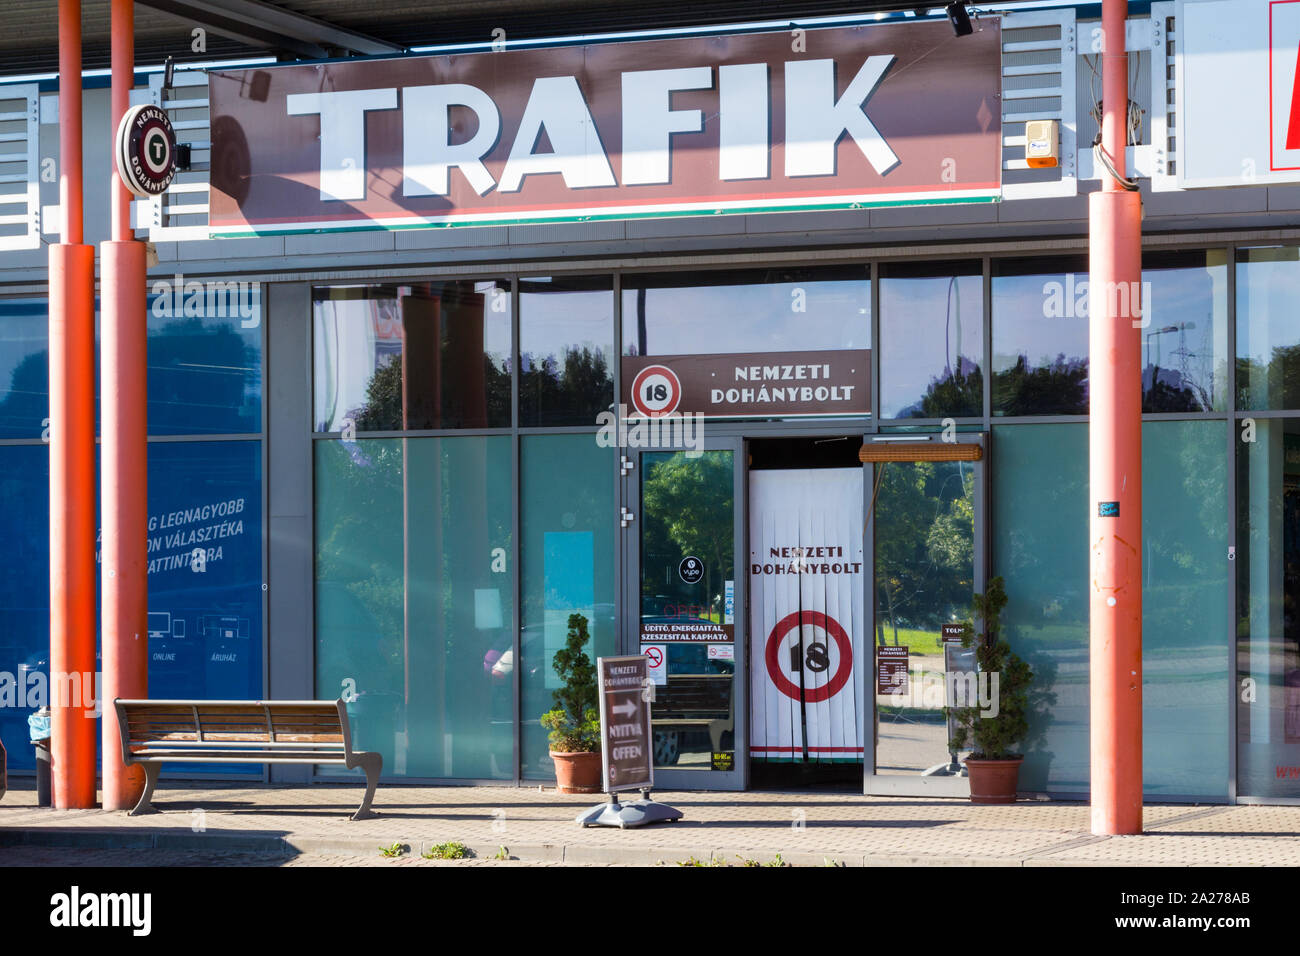 Tobacco shop front 'Nemzeti dohanybolt' with 18 age limit sign, Sopron, Hungary Stock Photo